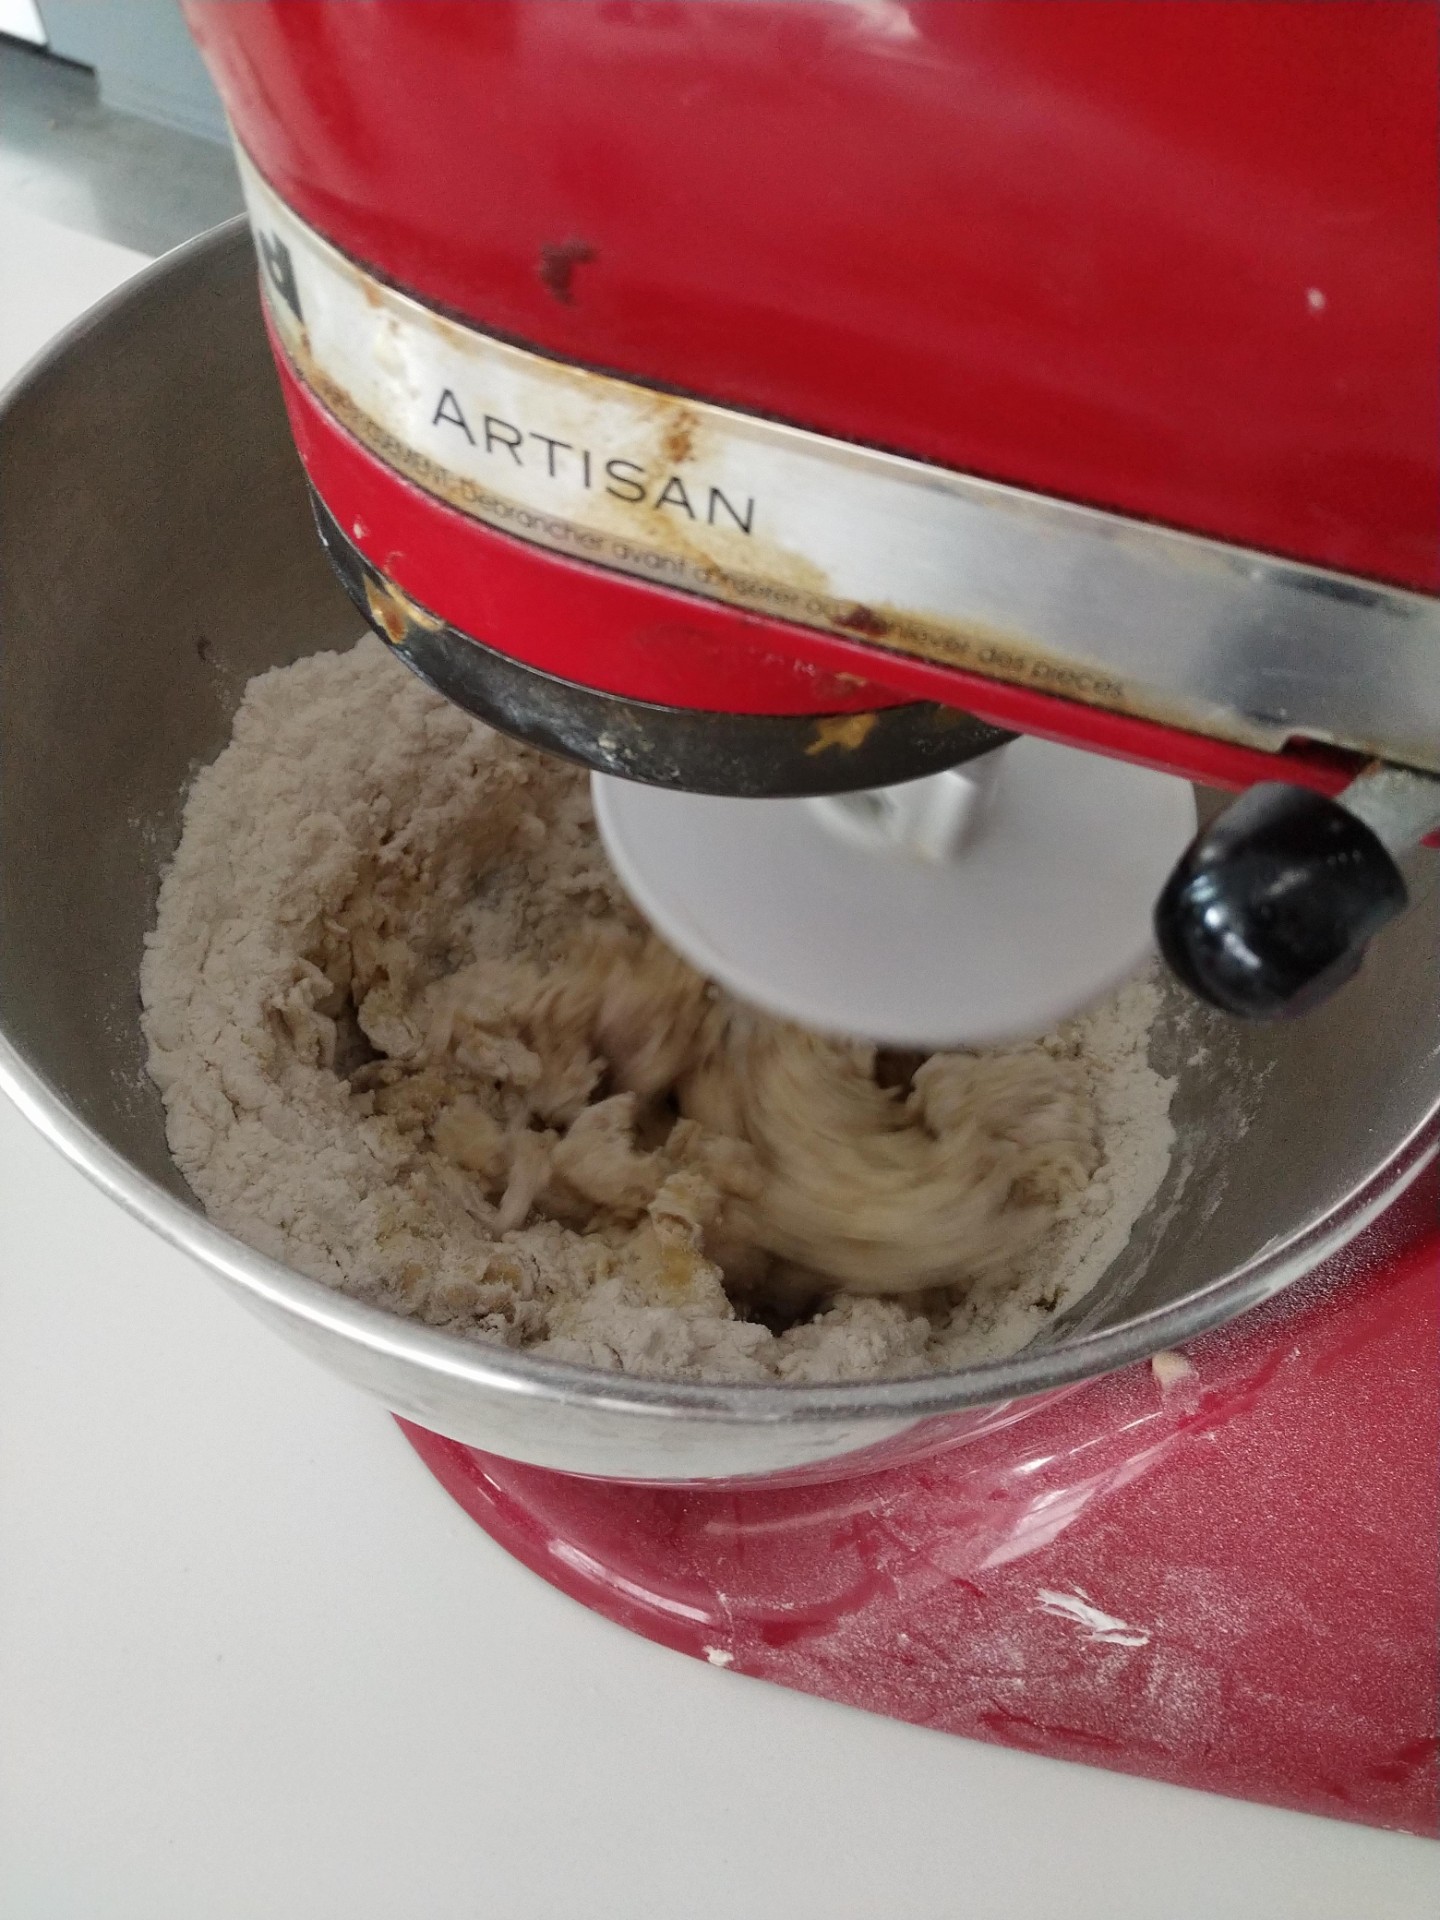 Pizza dough mixing in mixer